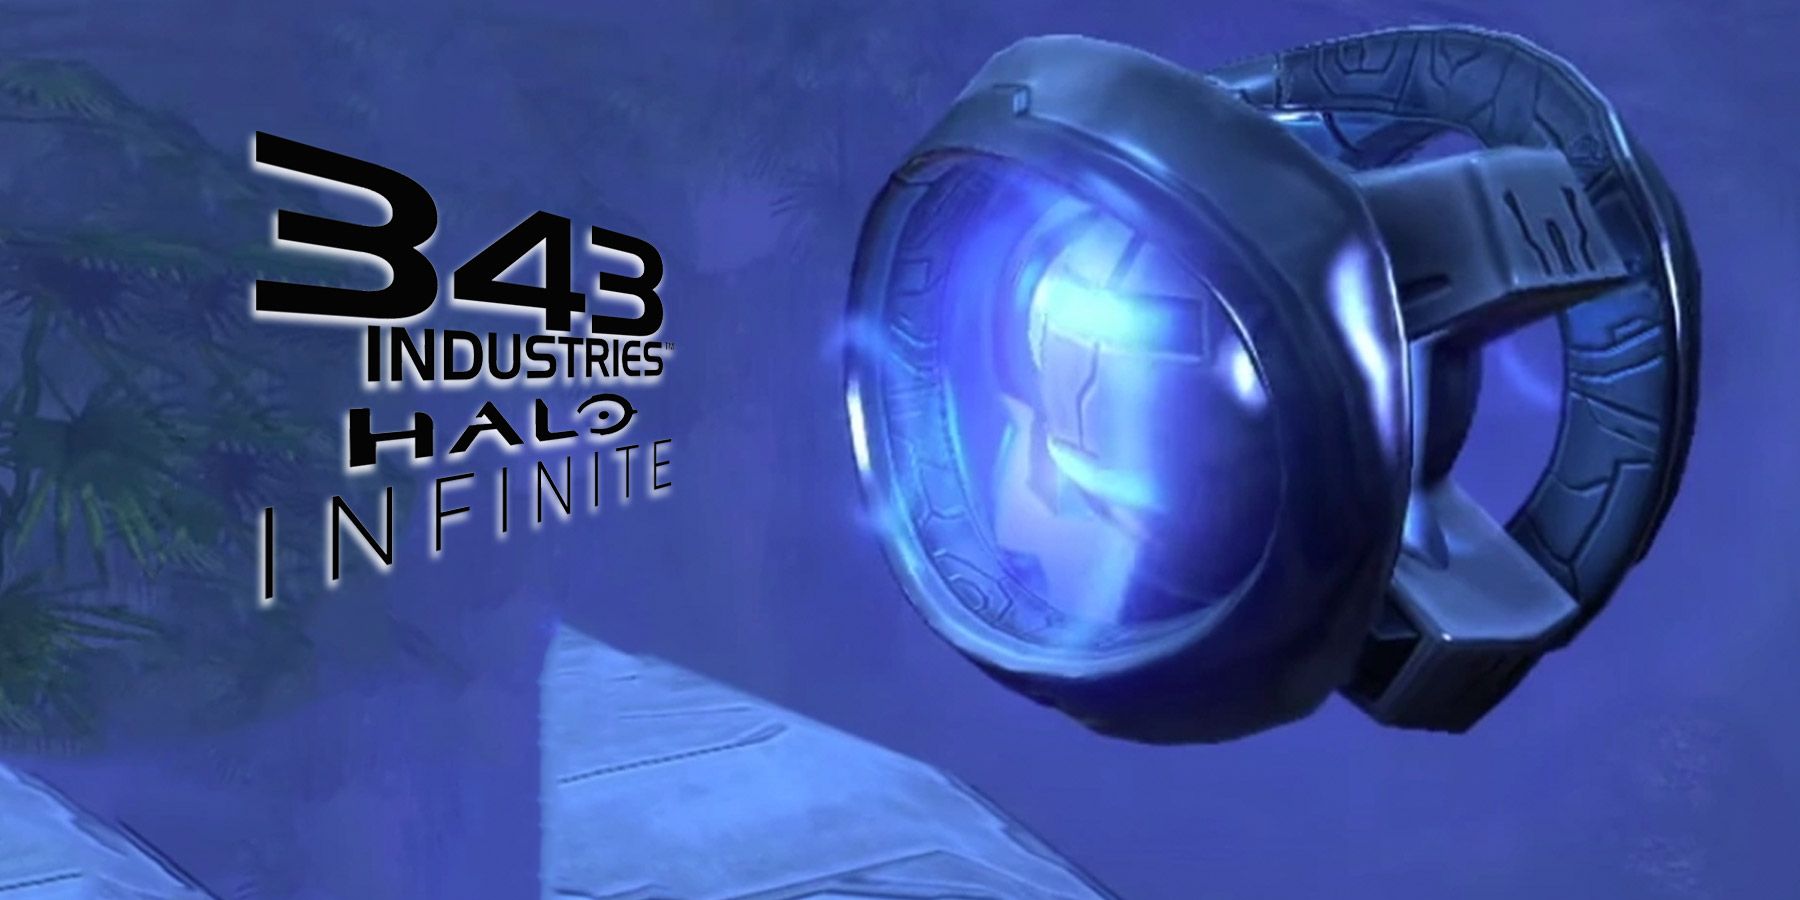 Halo Infinite Forge Mode 343